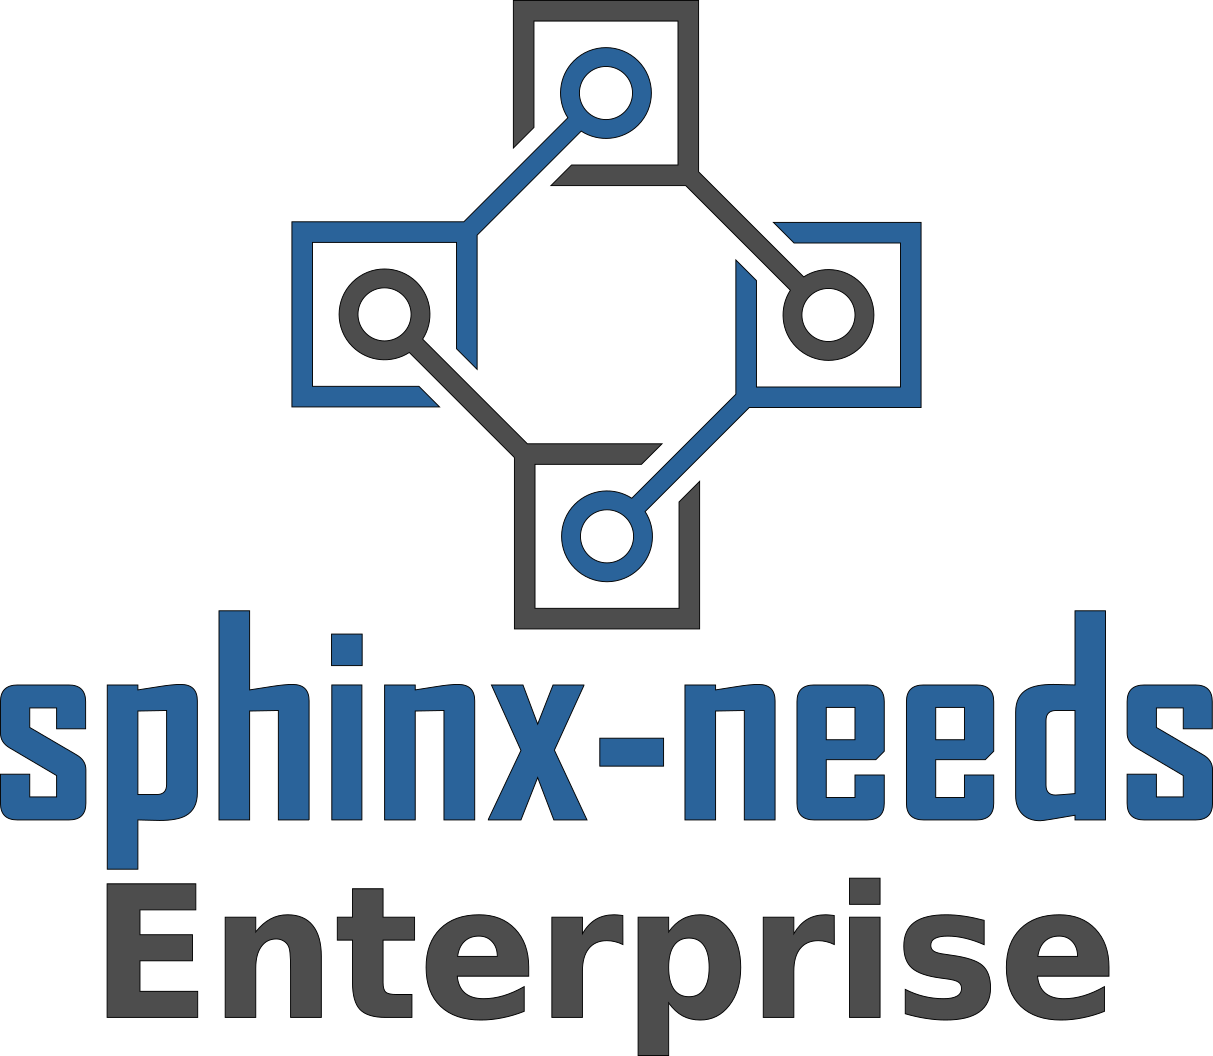 _images/sphinx-needs-enterprise-logo.png